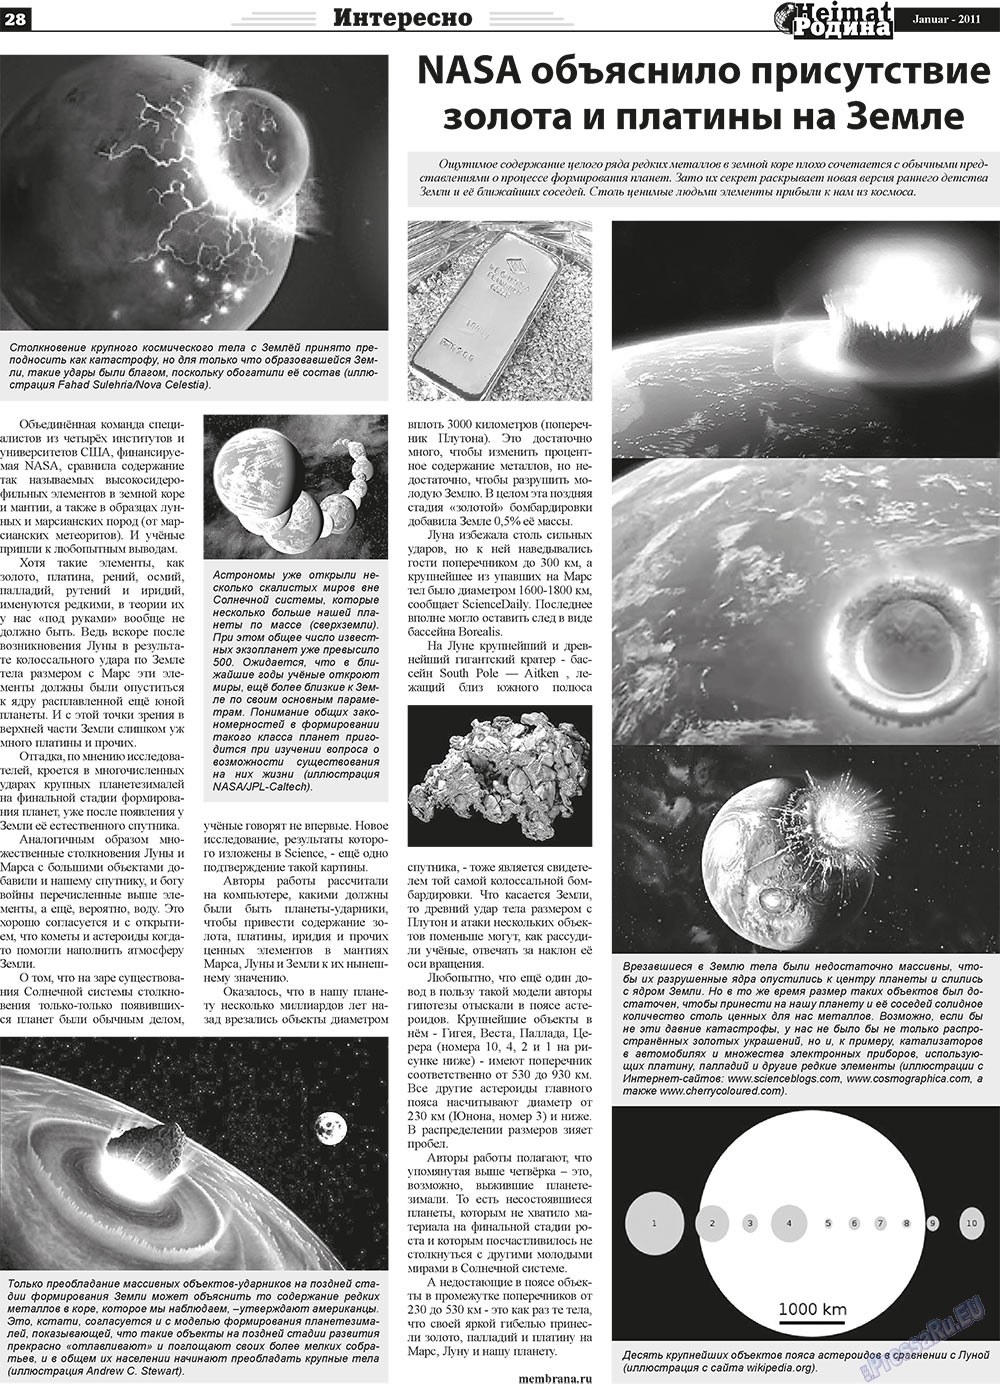 Heimat-Родина, газета. 2011 №1 стр.28